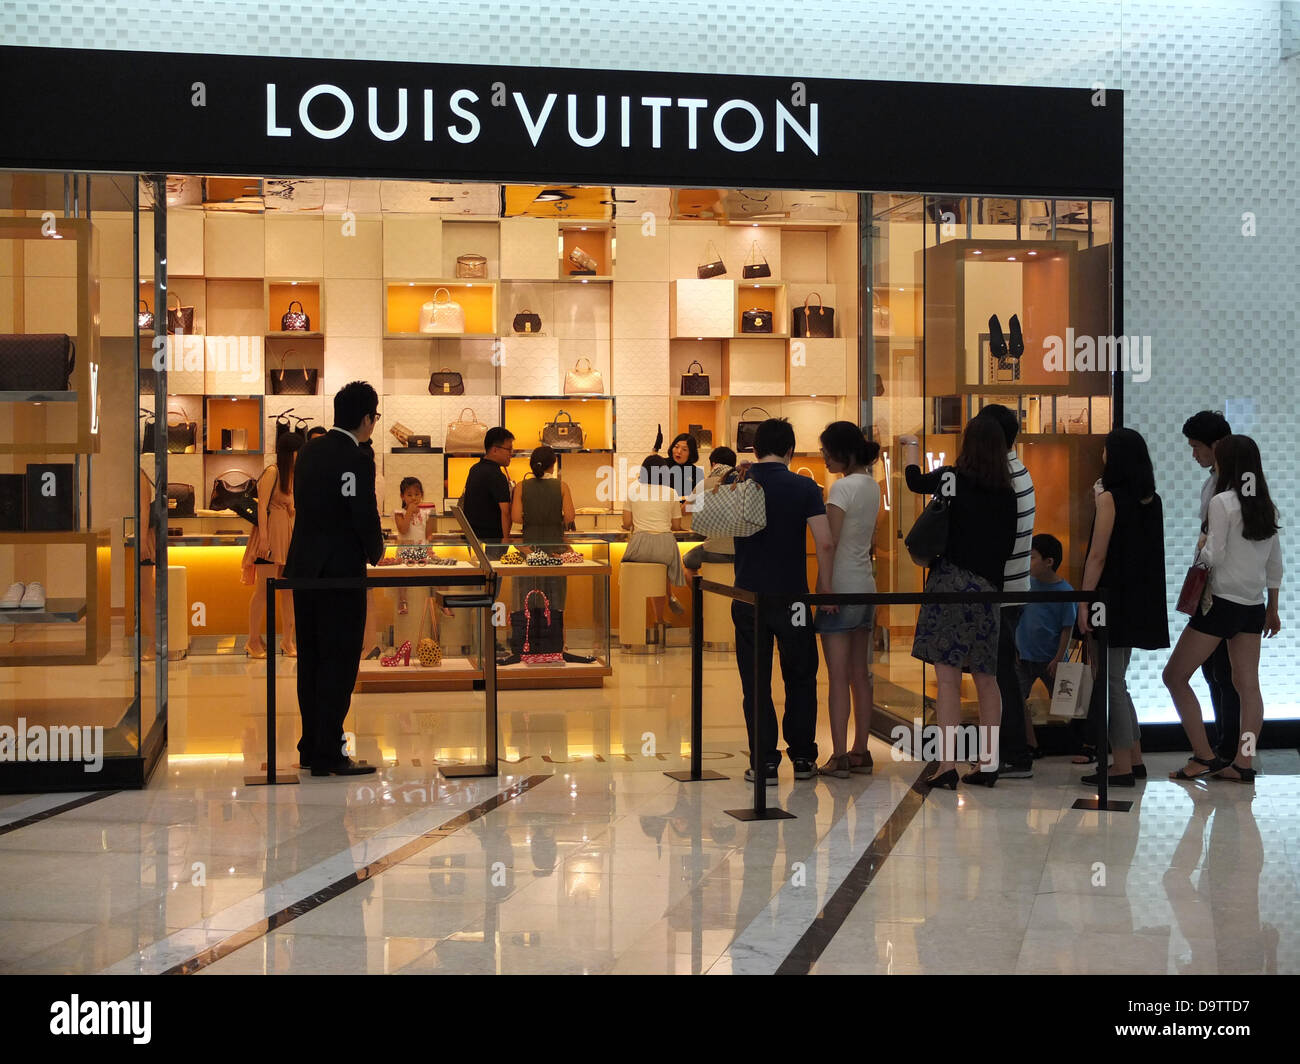 South Korea: Louis Vuitton shop in Seoul Photo - Alamy